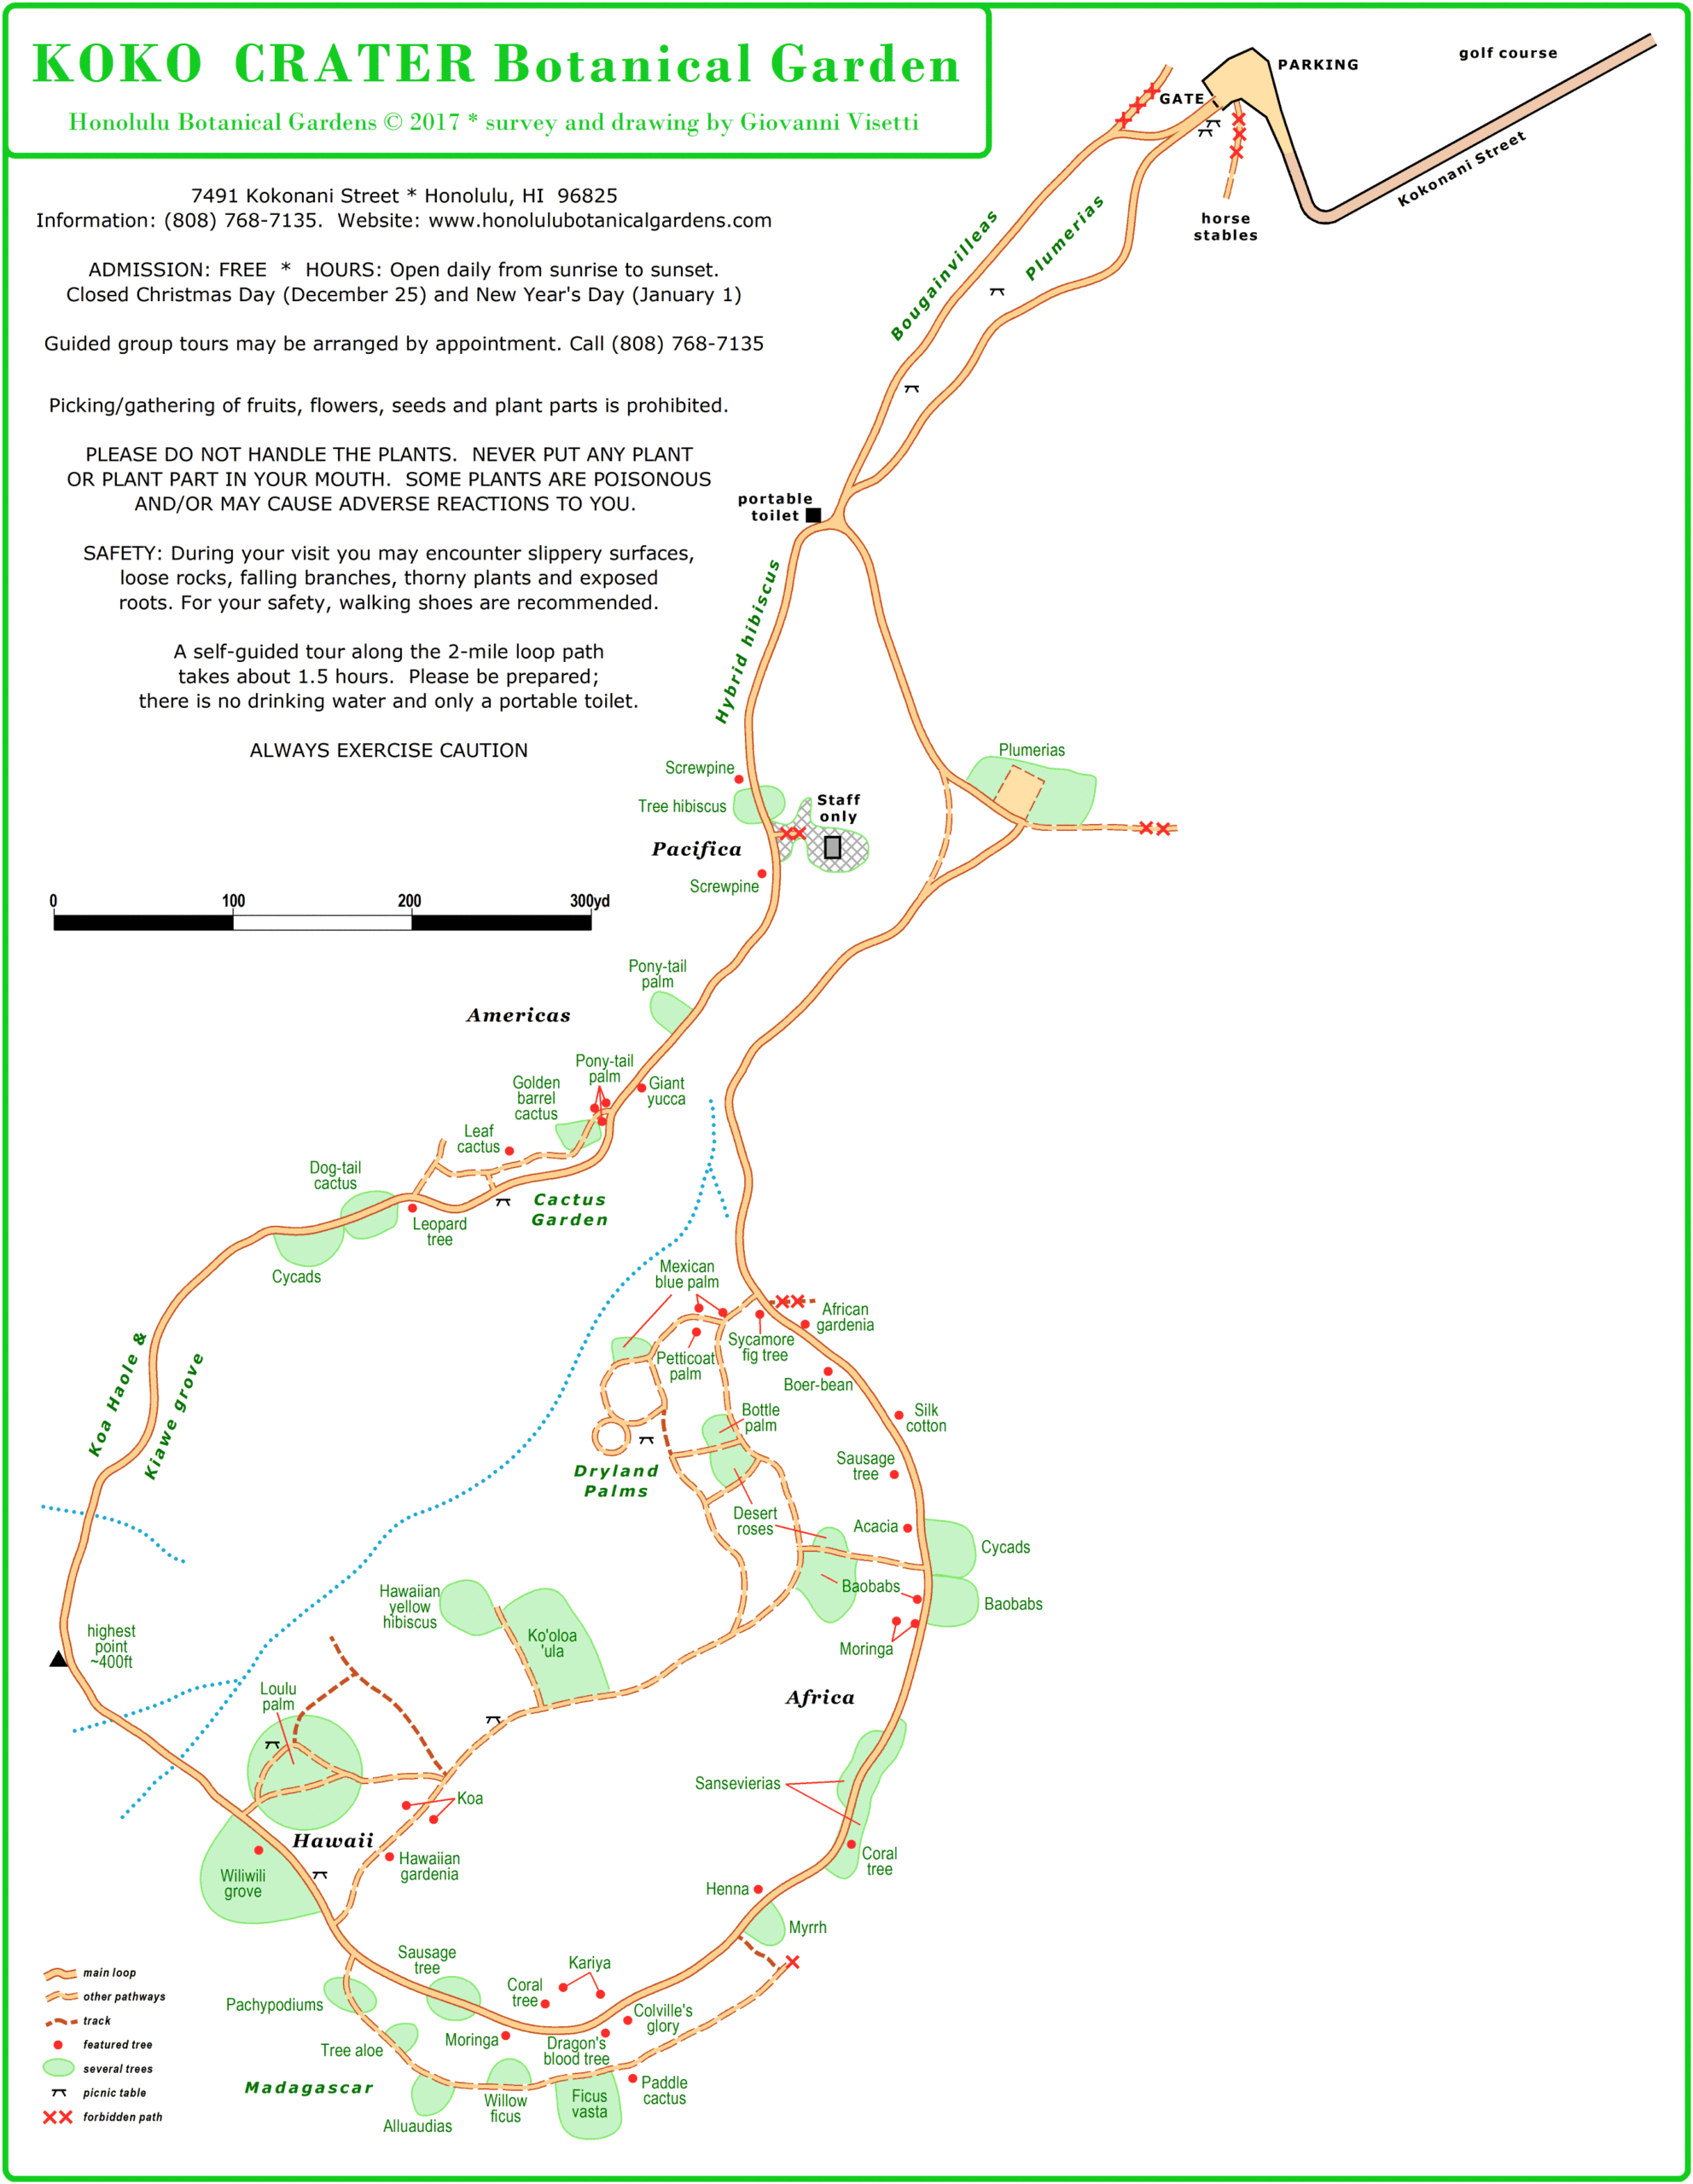 Koko Crater Botanical Garden Map (Honolulu Gov)